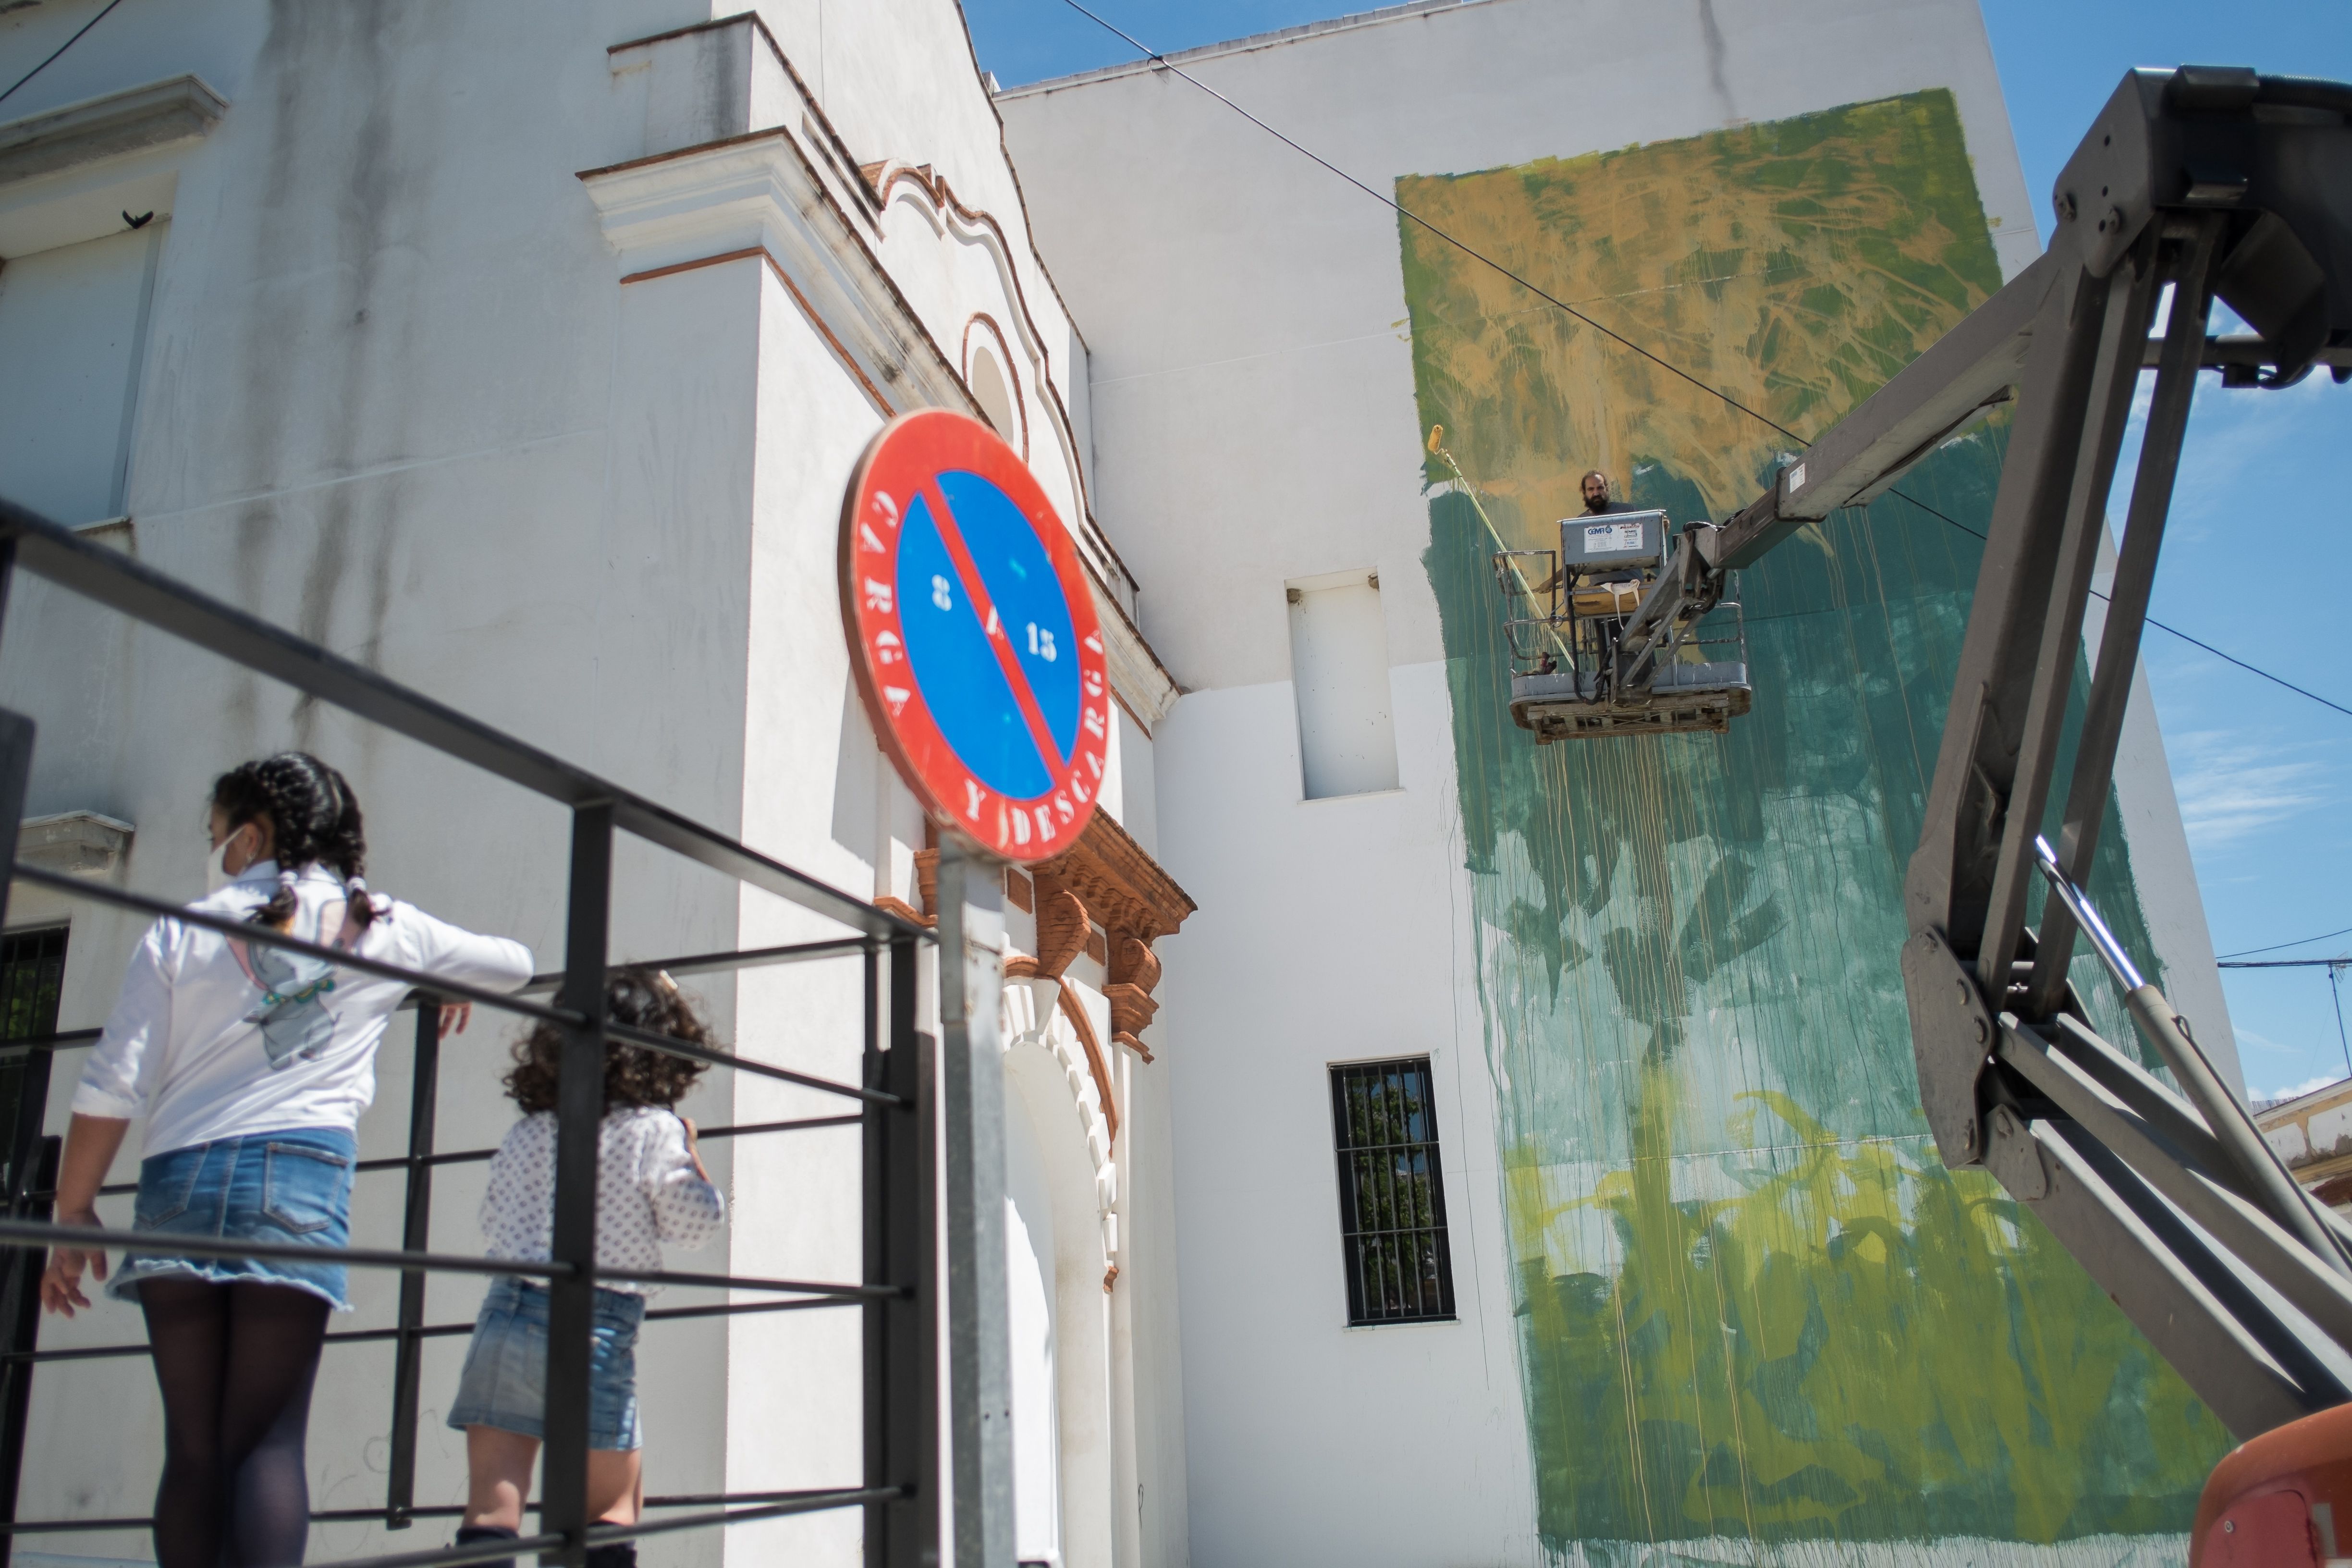 Trebujena celebra este fin de semana Art-Mura, el primer certamen de pintura mural y arte urbano.